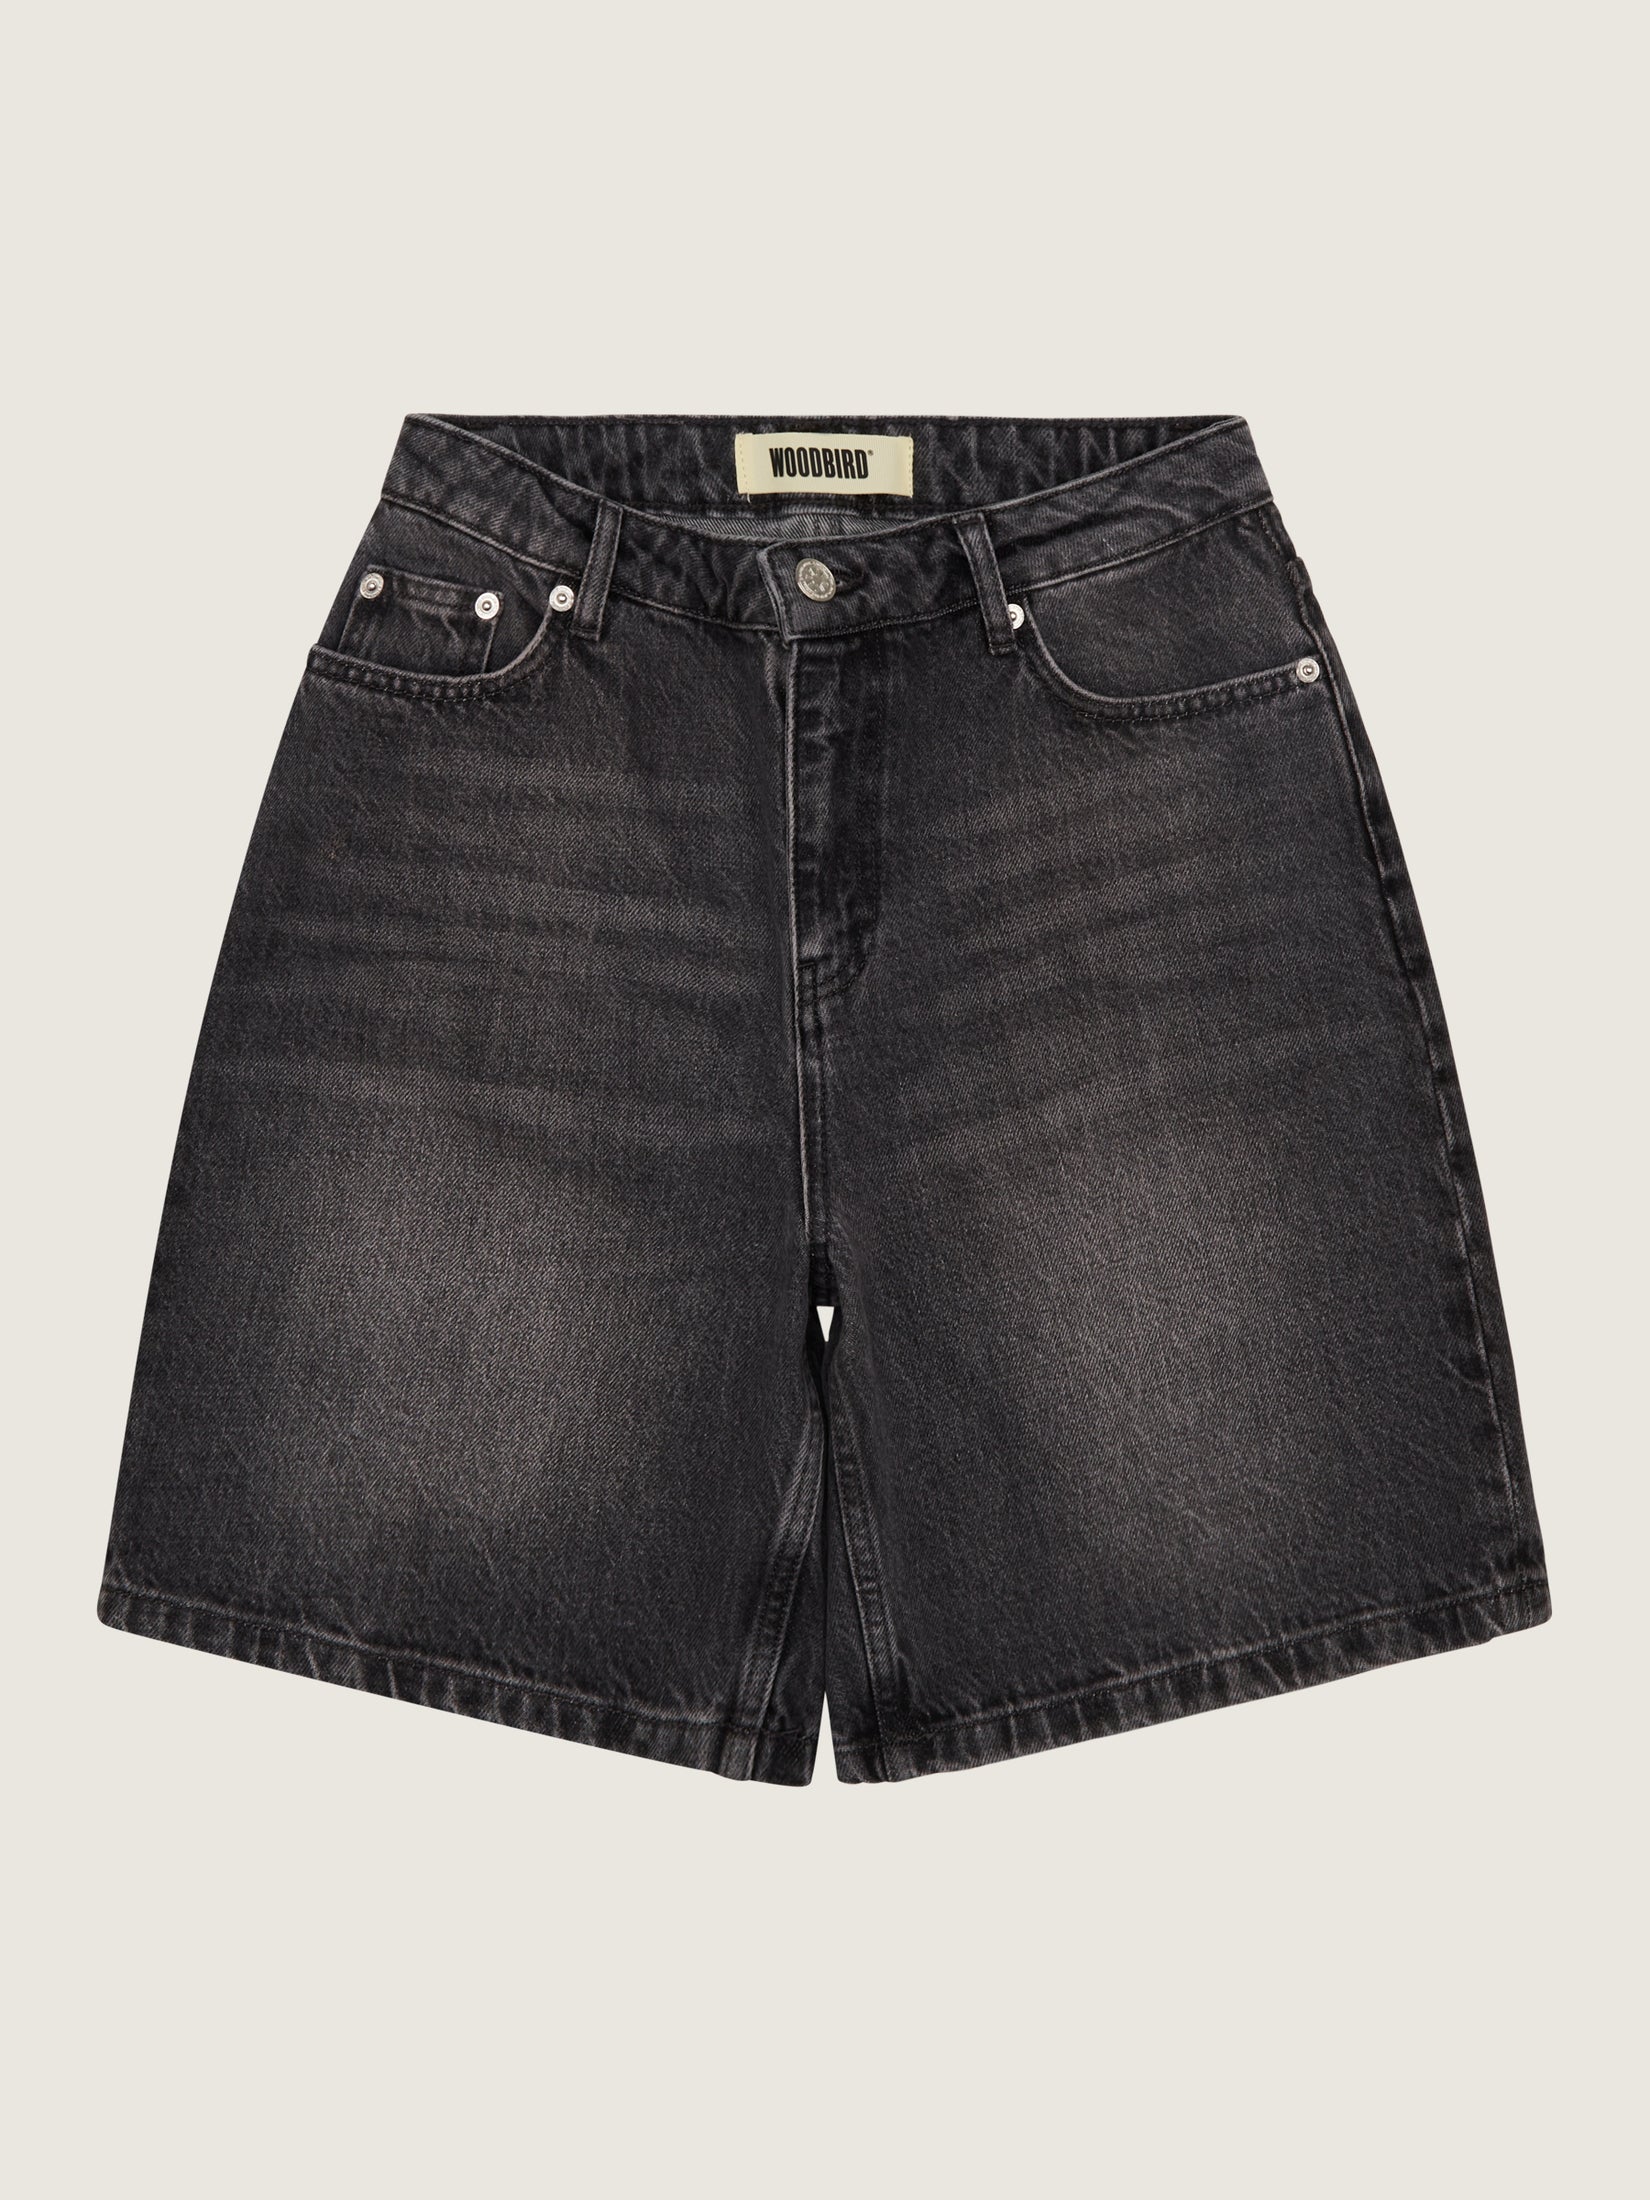 Shorts Female | Quality Shorts Designed in Denmark | Woodbird 